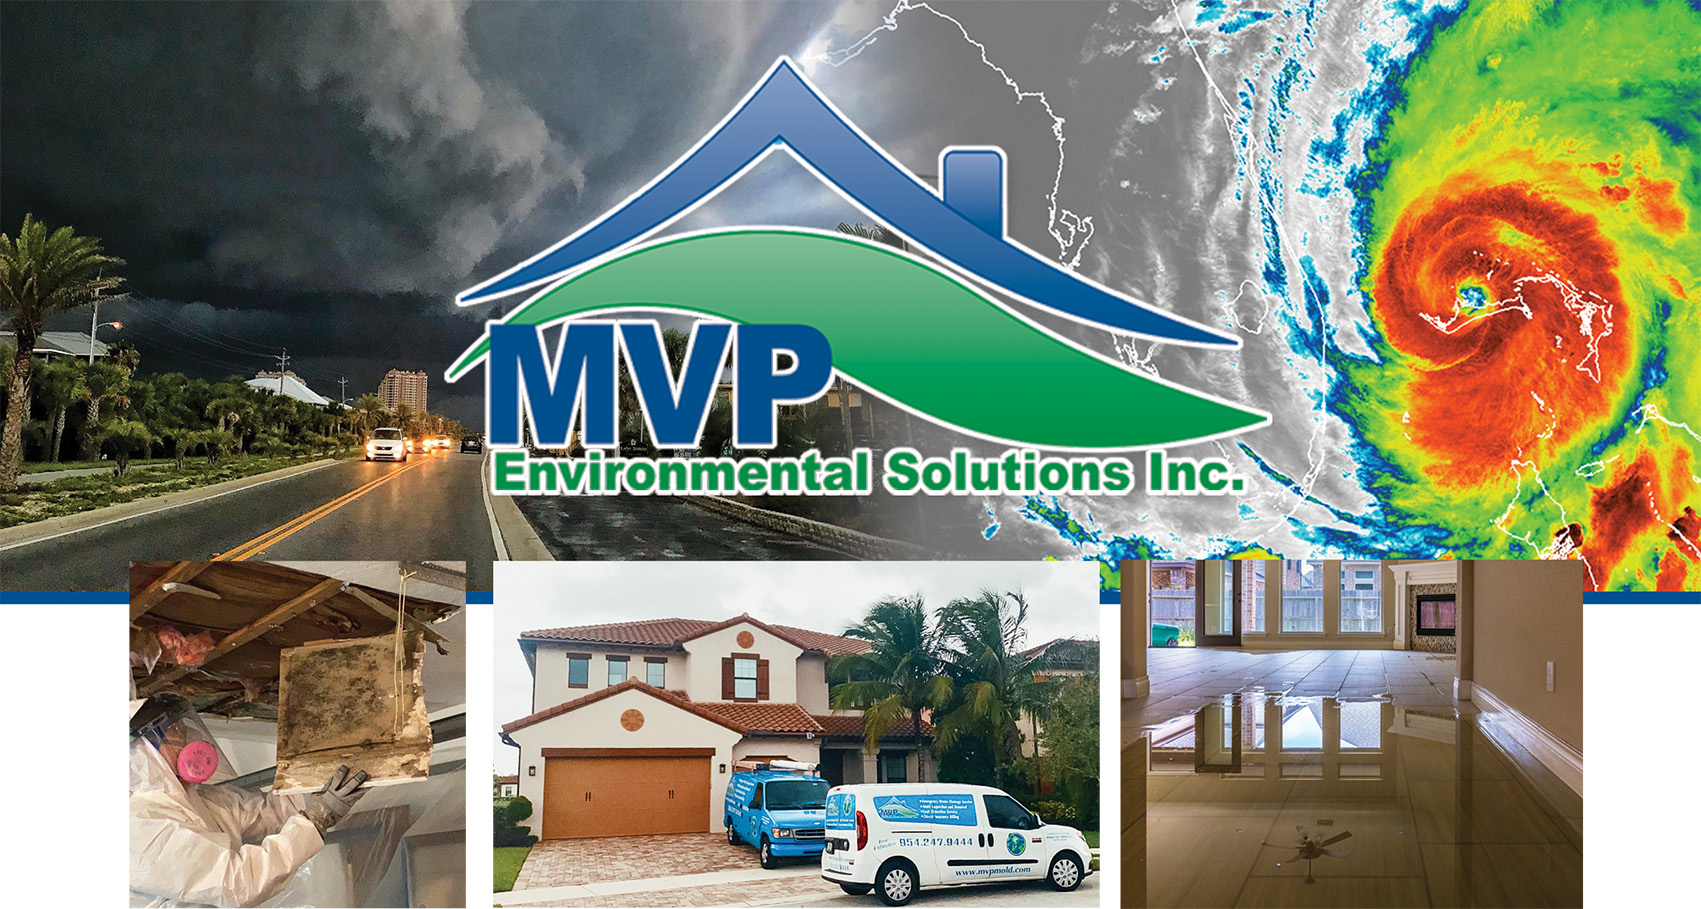 MVP Enviromental Solutions Inc. Images